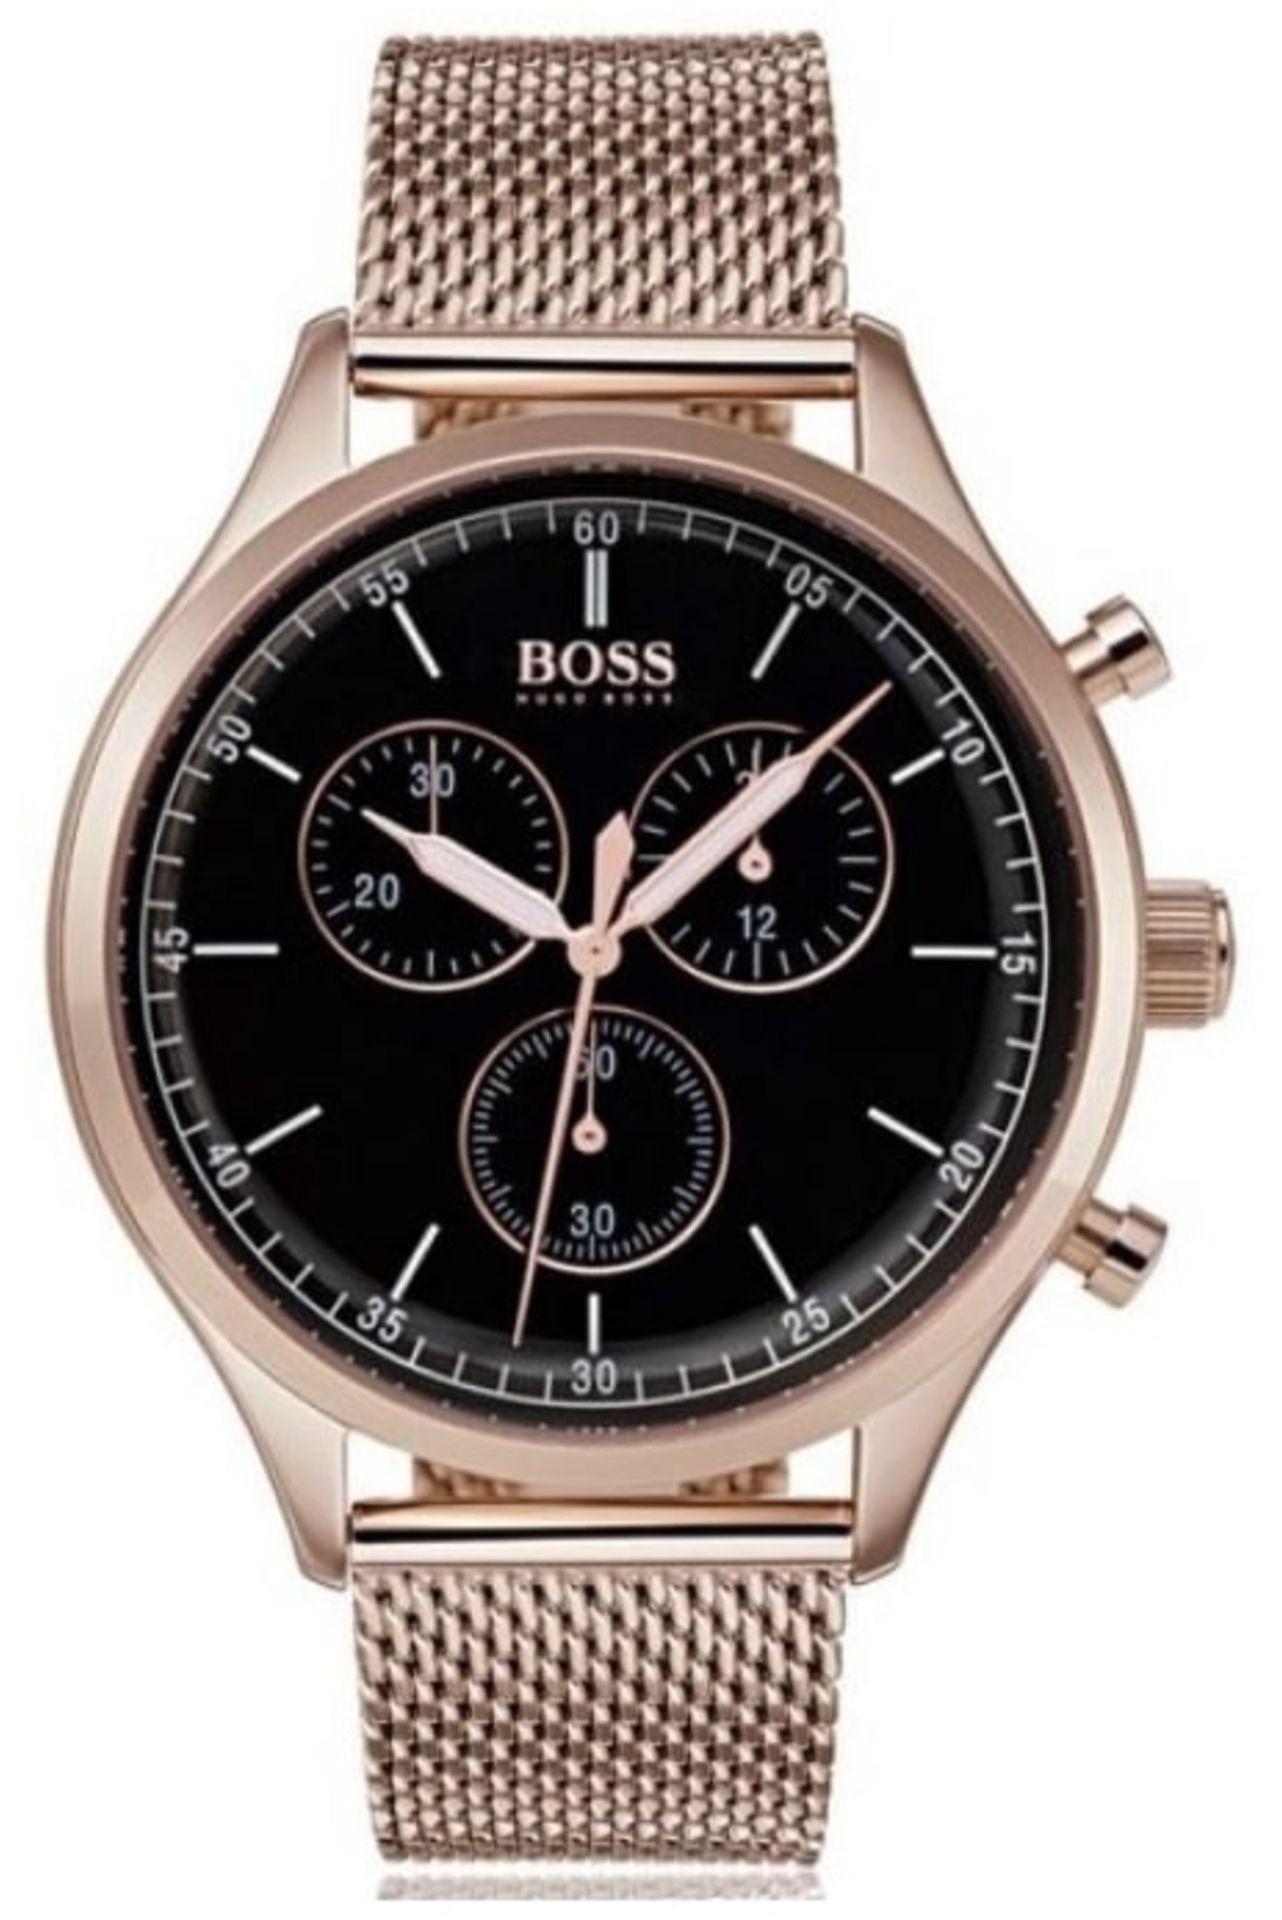 Hugo Boss 1513548 Men's Companion Rose Gold Mesh Band Quartz Chronograph Watch - Image 3 of 7